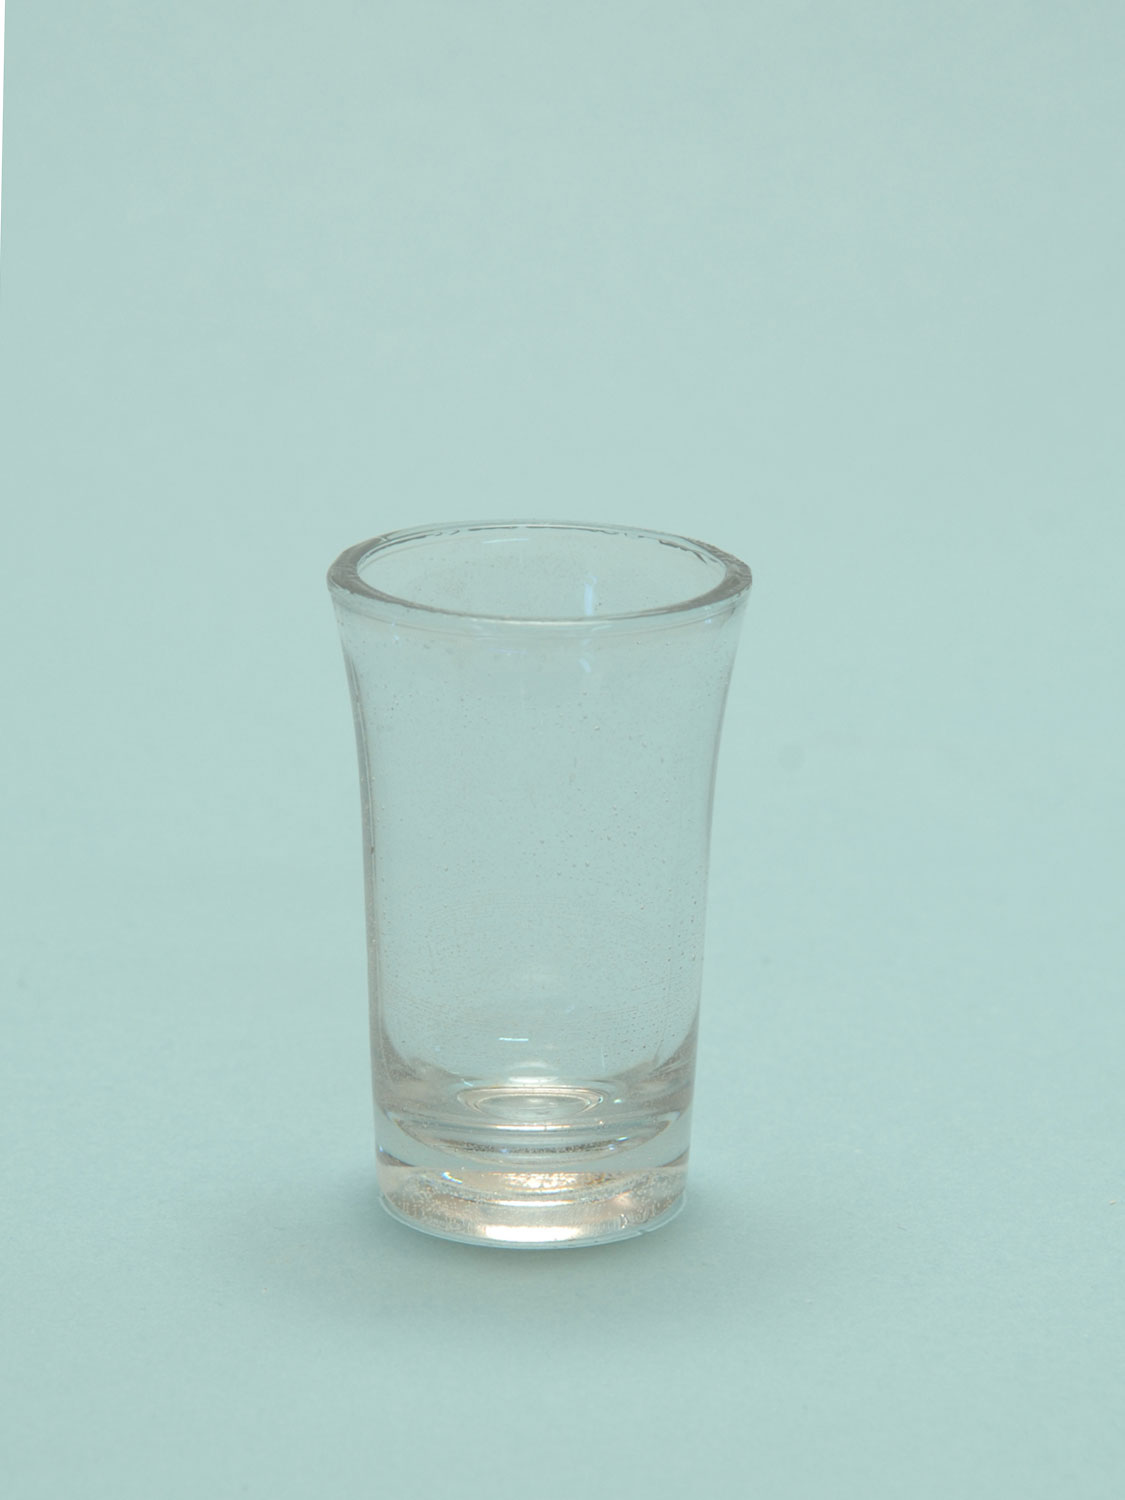 Suikerglas Jeneverglaasje 8,5 x 5,2 cm.